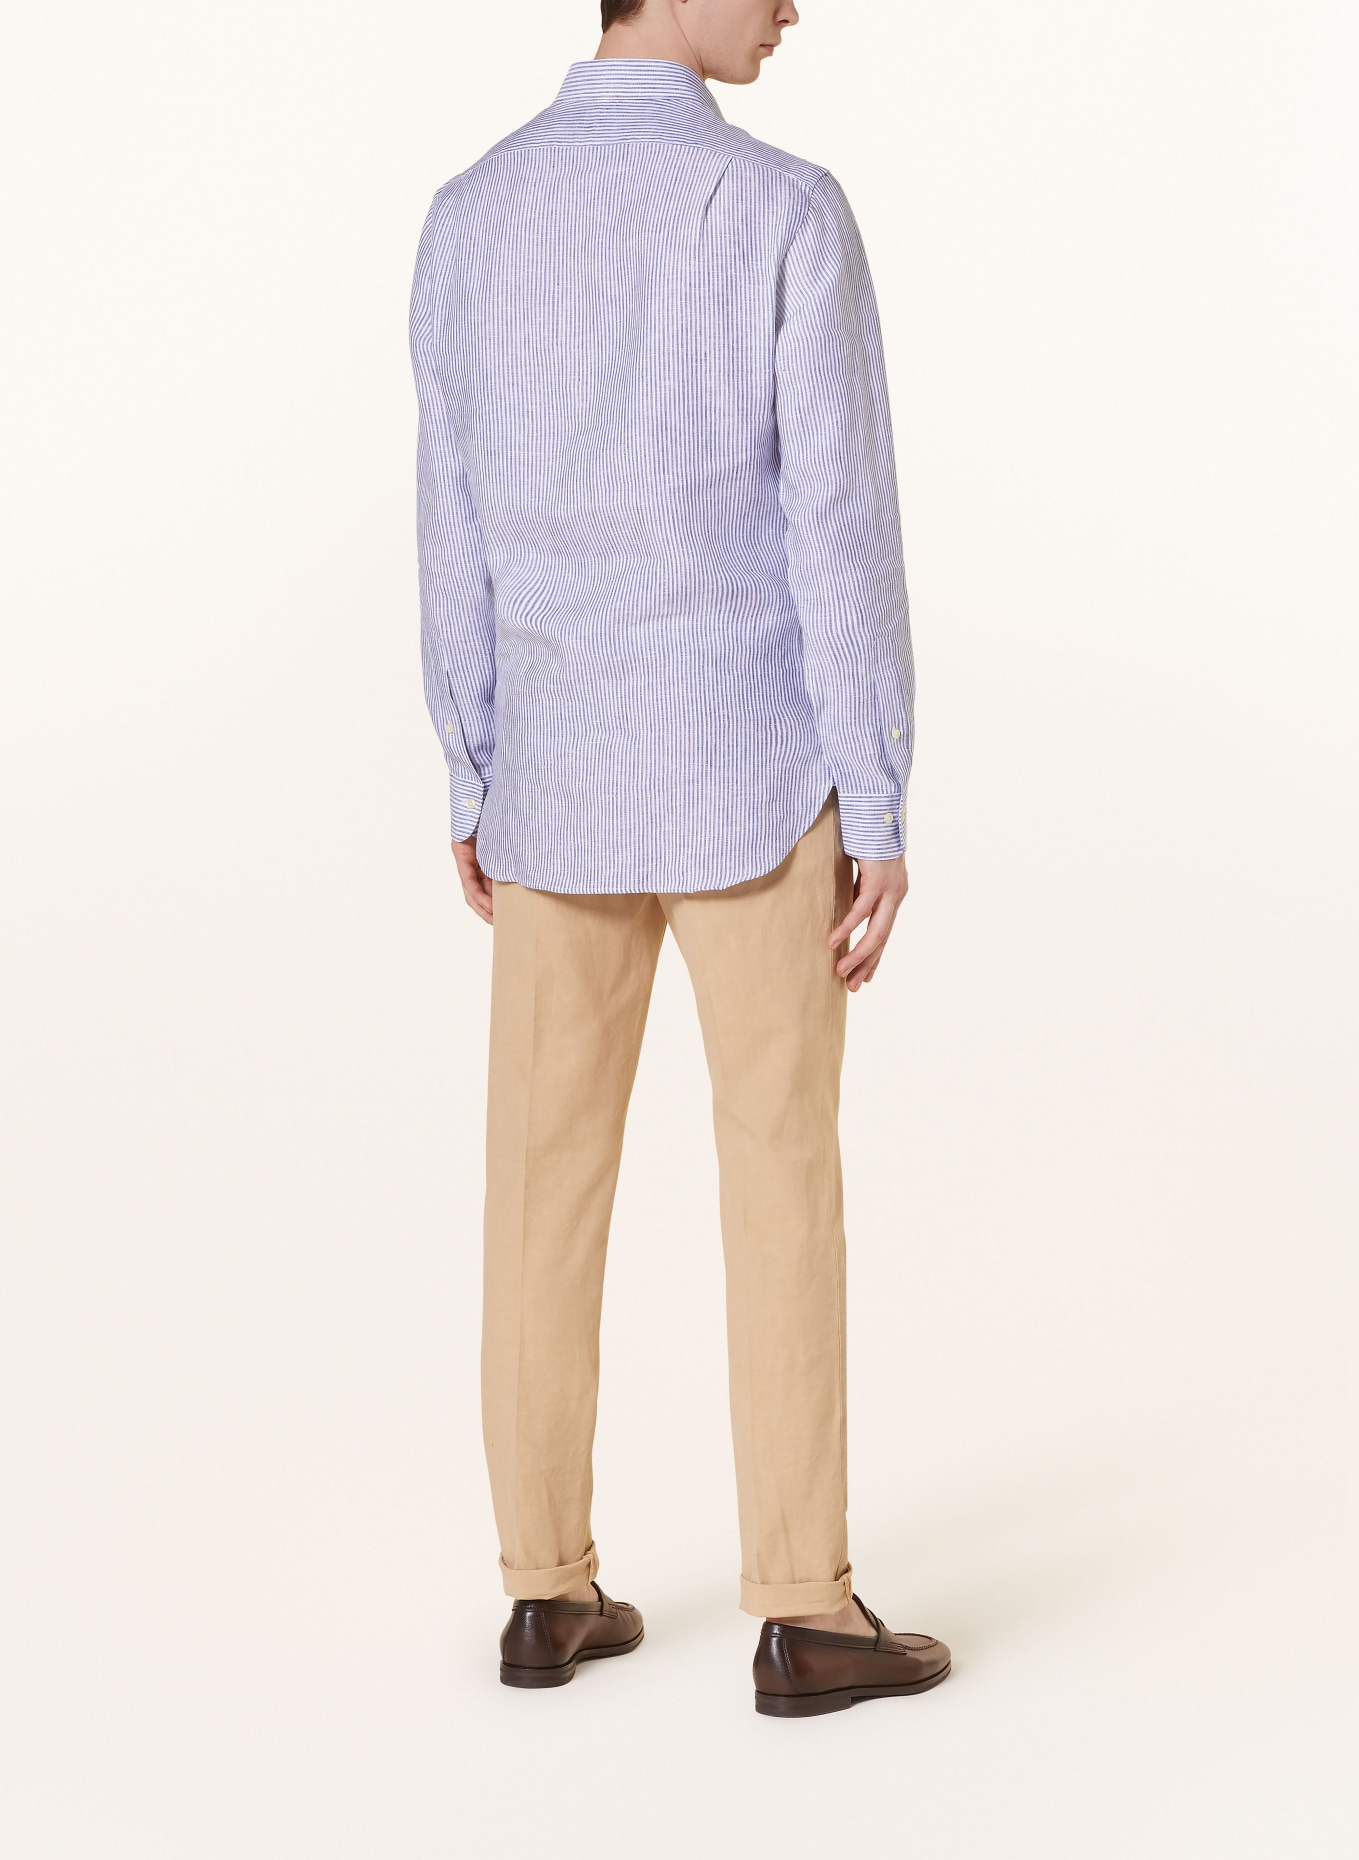 POLO RALPH LAUREN Leinenhemd Slim Fit, Farbe: WEISS/ BLAU (Bild 3)